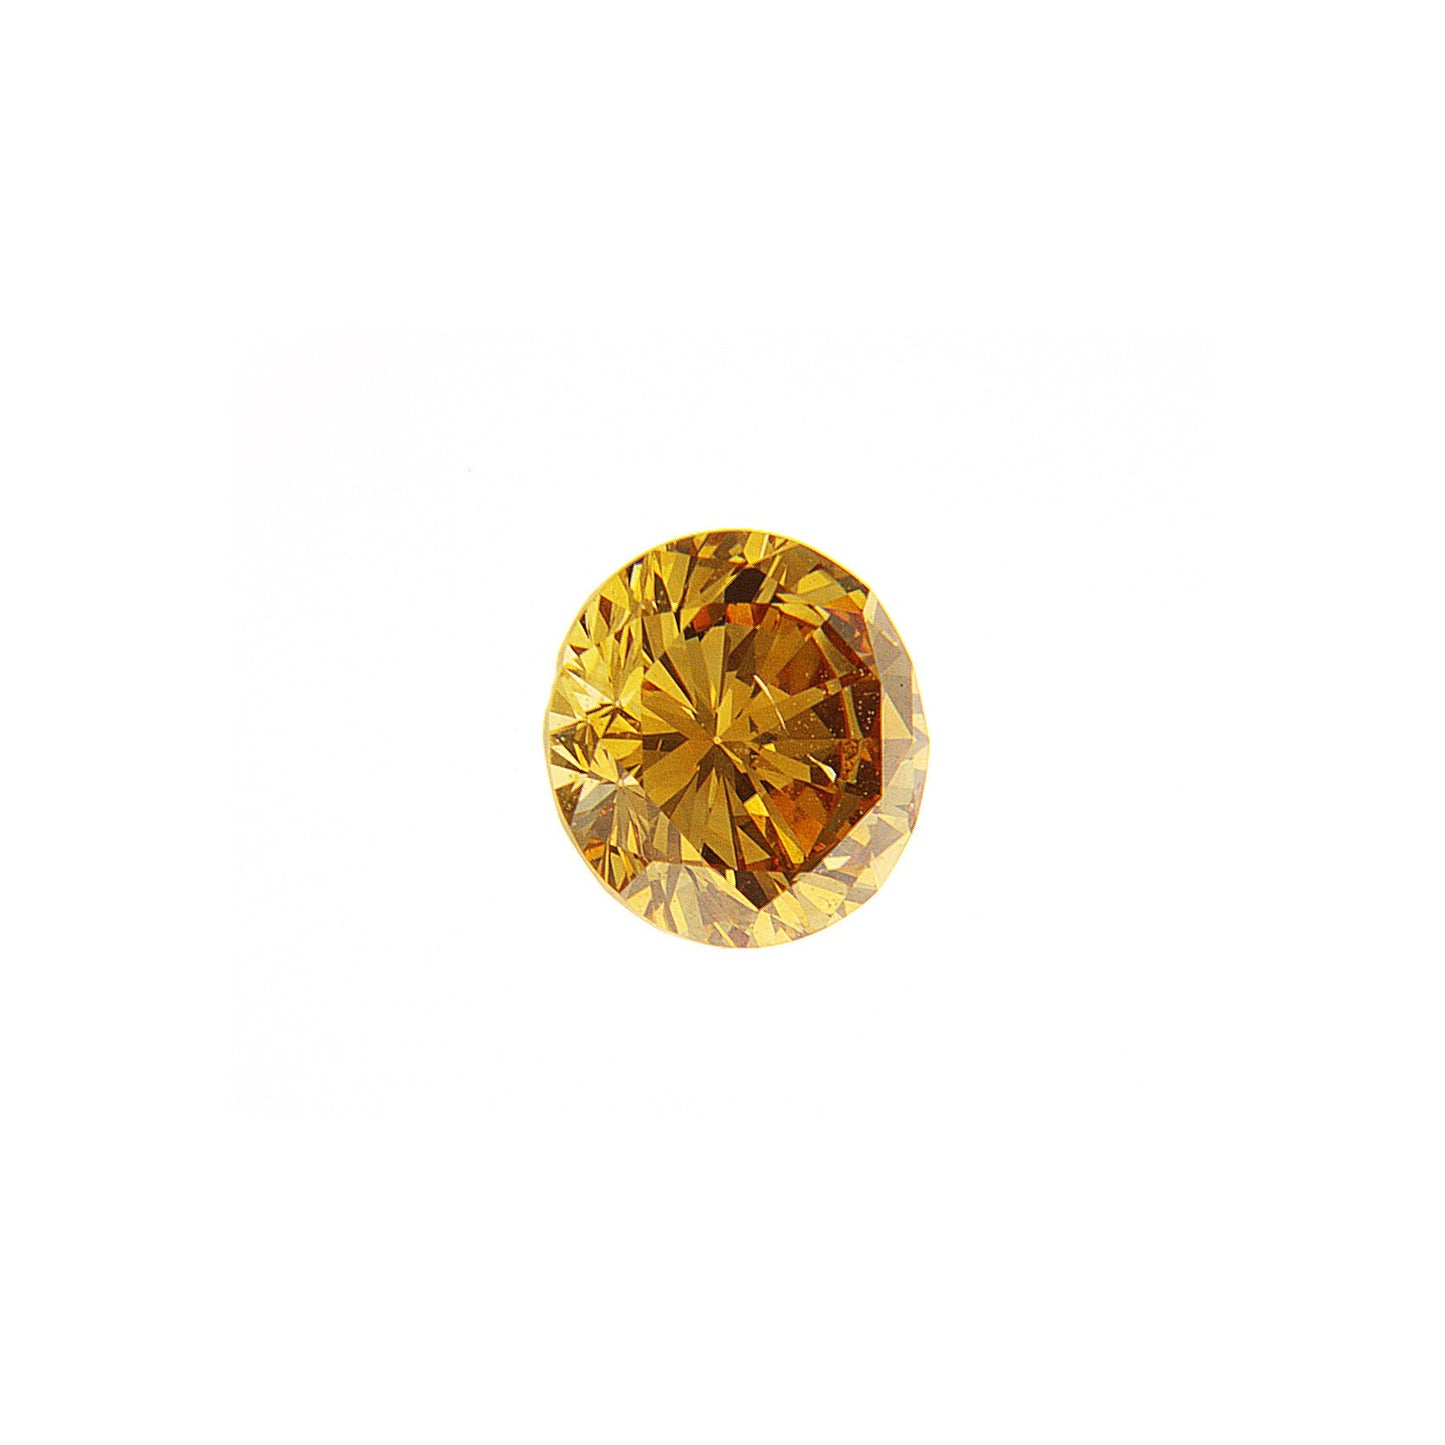 0.26ct Fancy Intense Yellow-Orange, Round Diamond, SI2 - 4.08 - 4.15 x 2.50mm